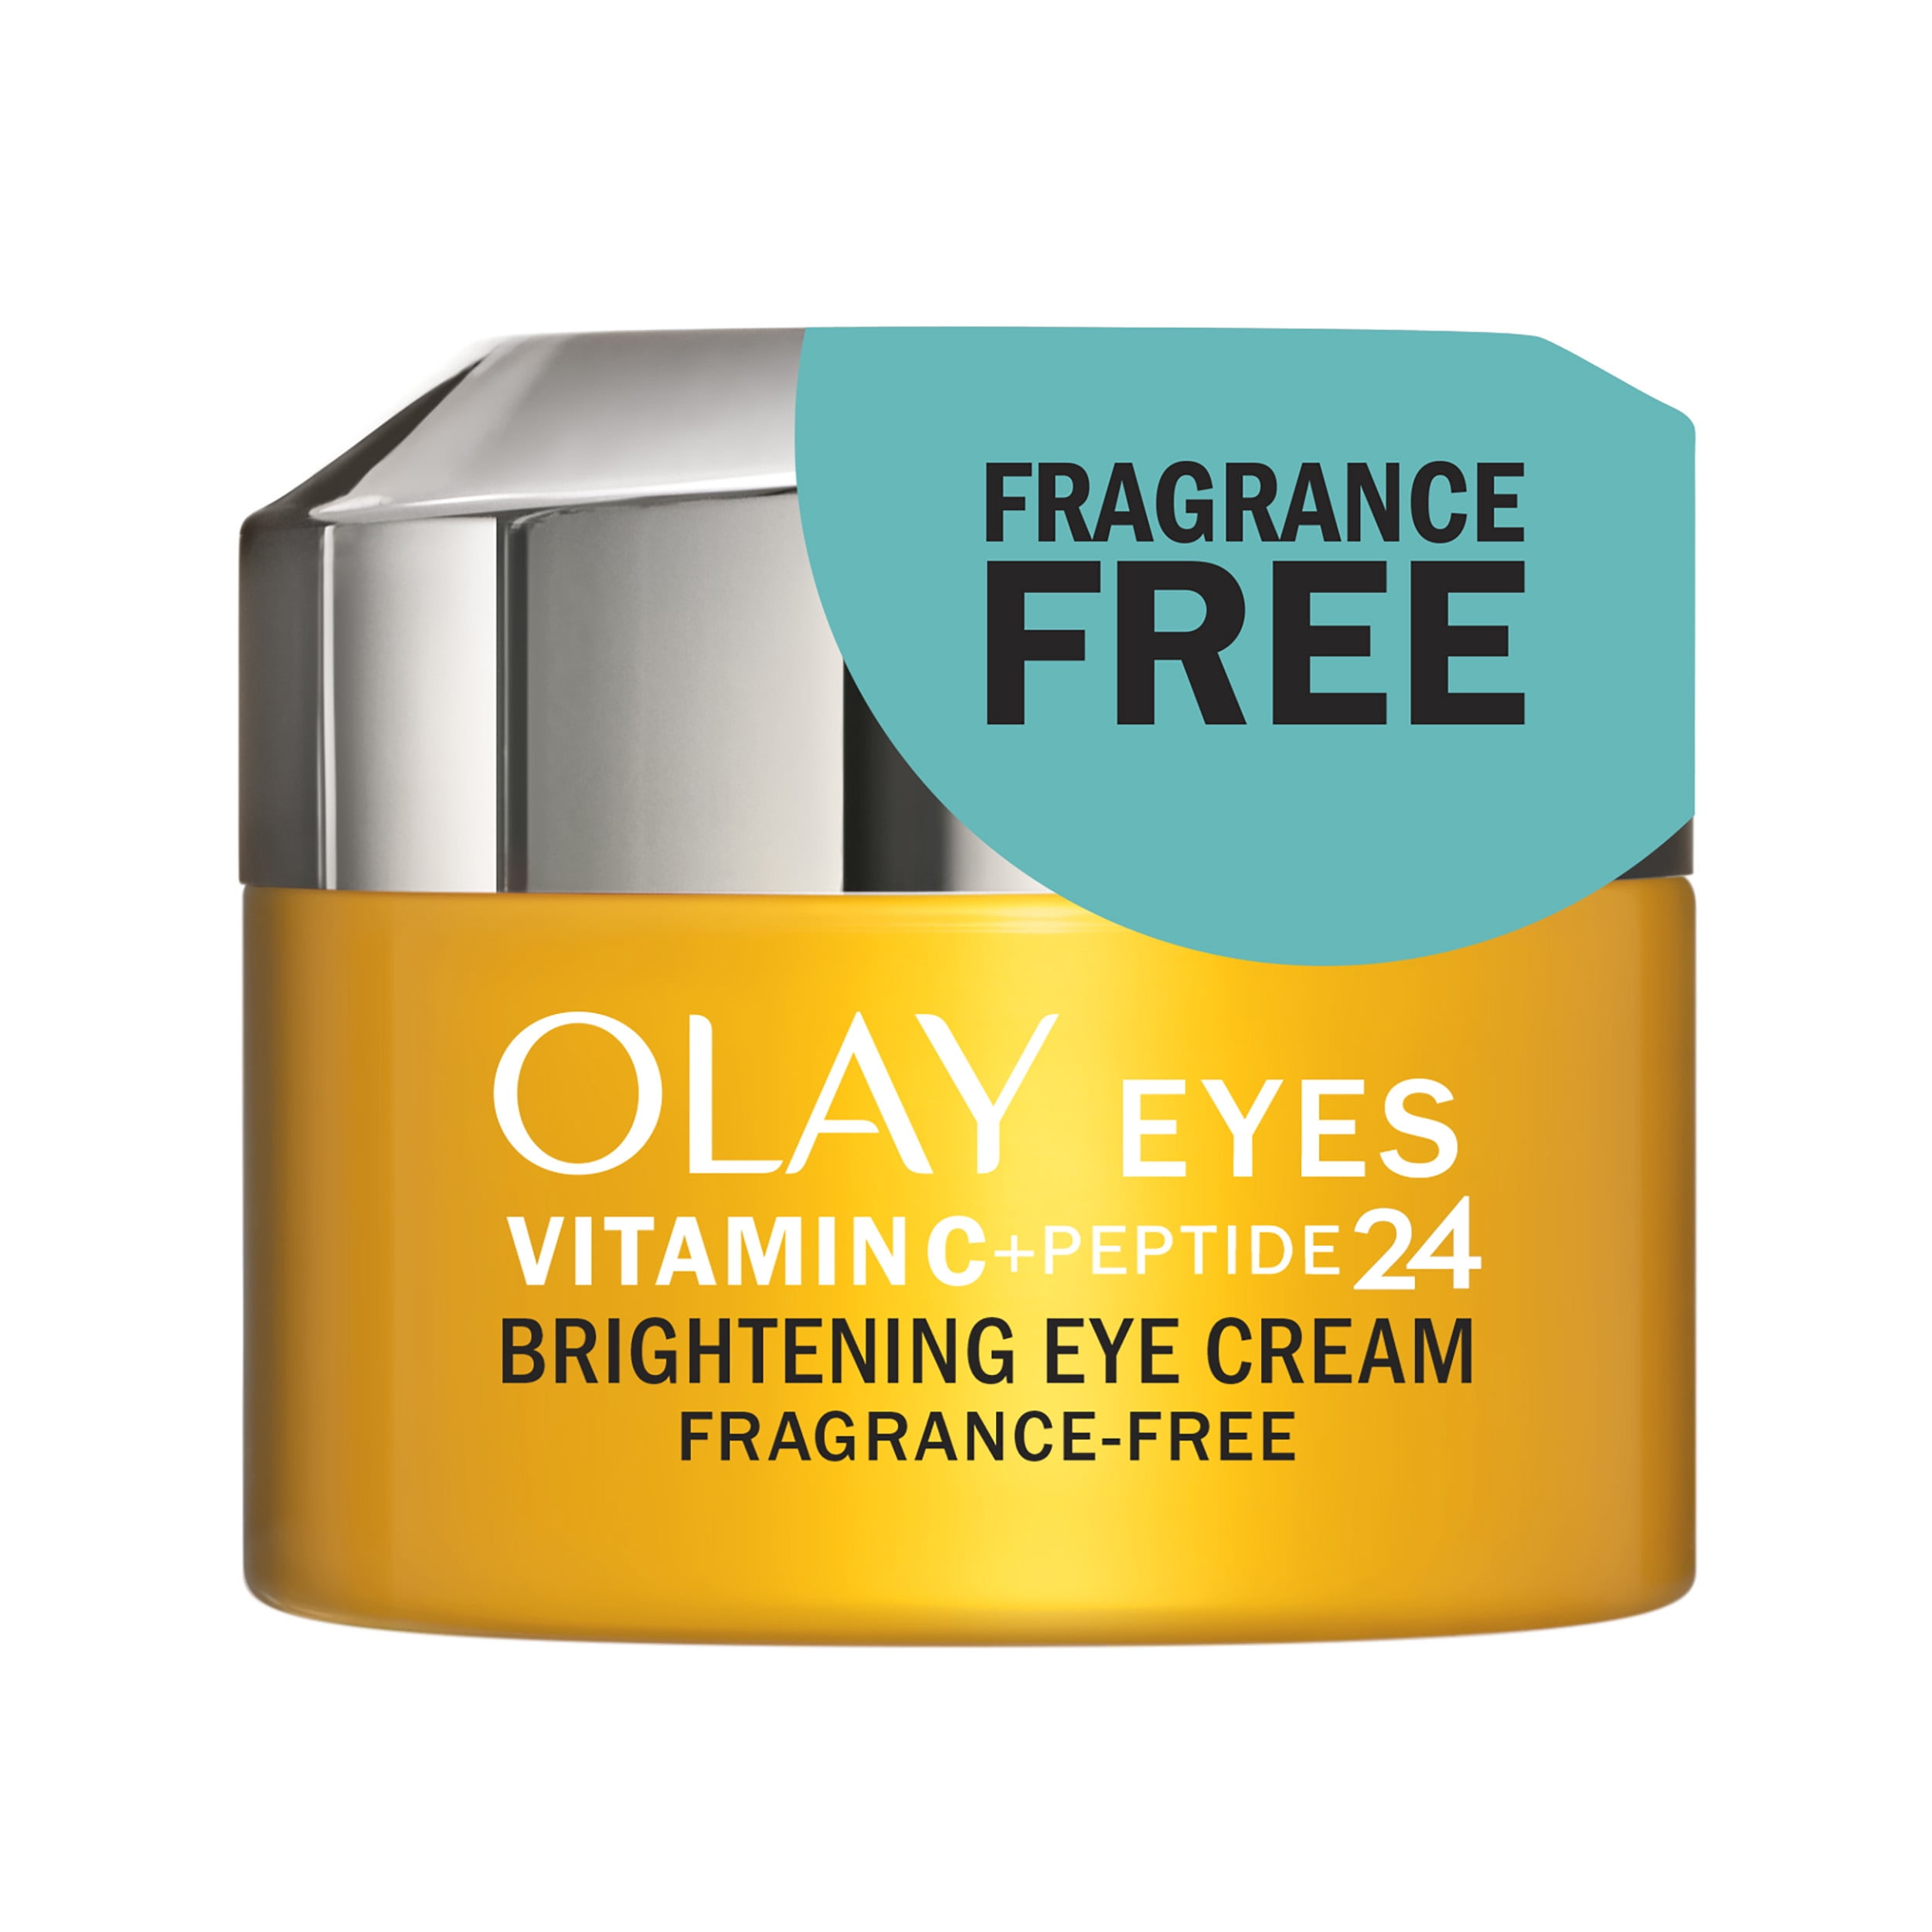 Olay Vitamin C + Peptide 24 Eye Cream, Fragrance-Free, 0.5 oz